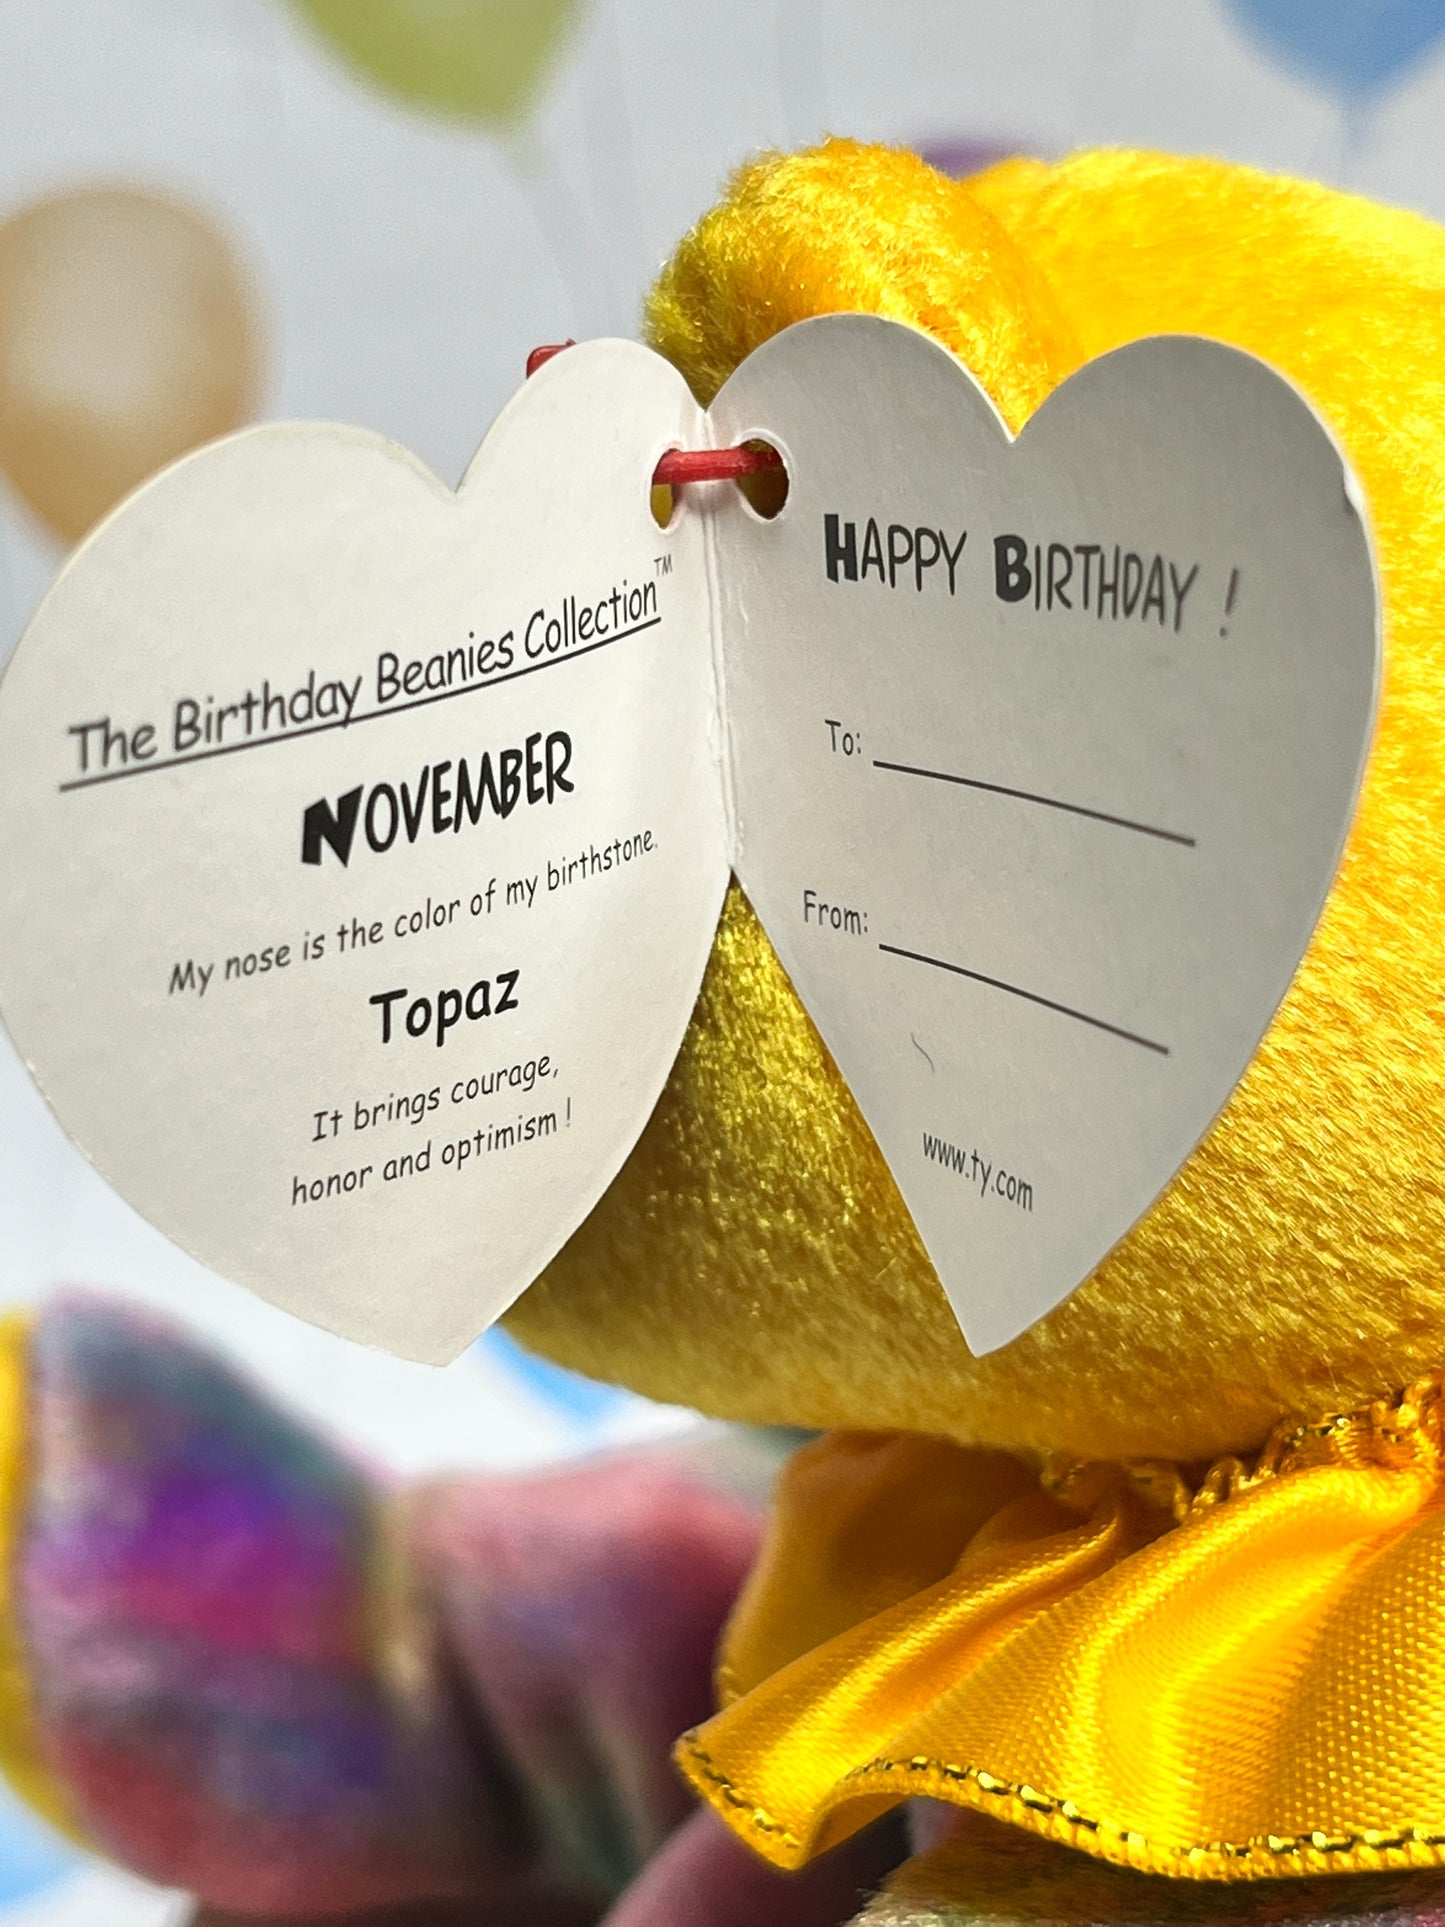 Ty Beanie Babies “November” The Birthday Bear, October 1 2001